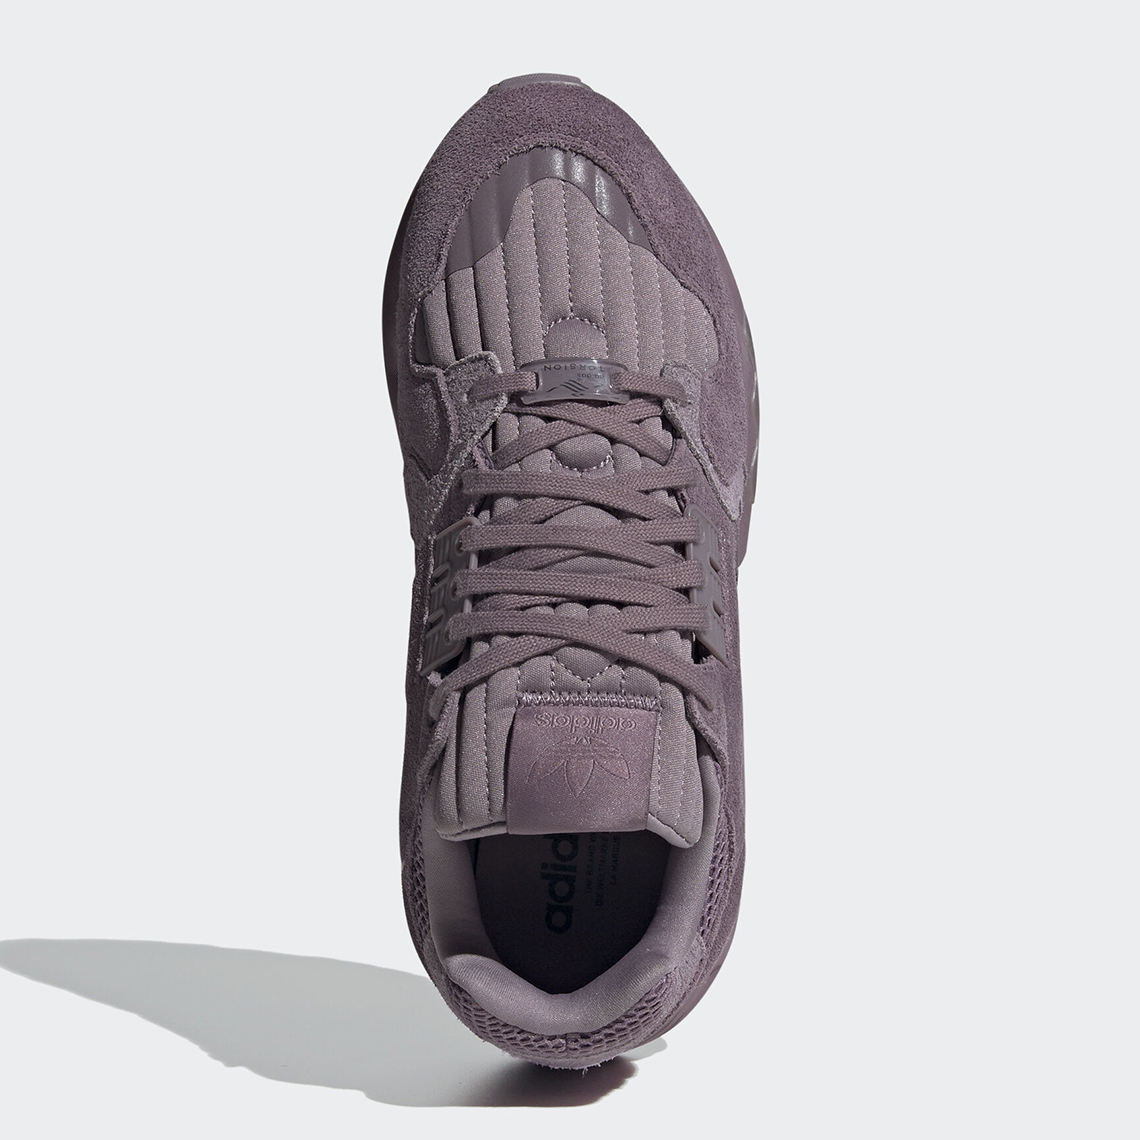 adidas zx torsion purple